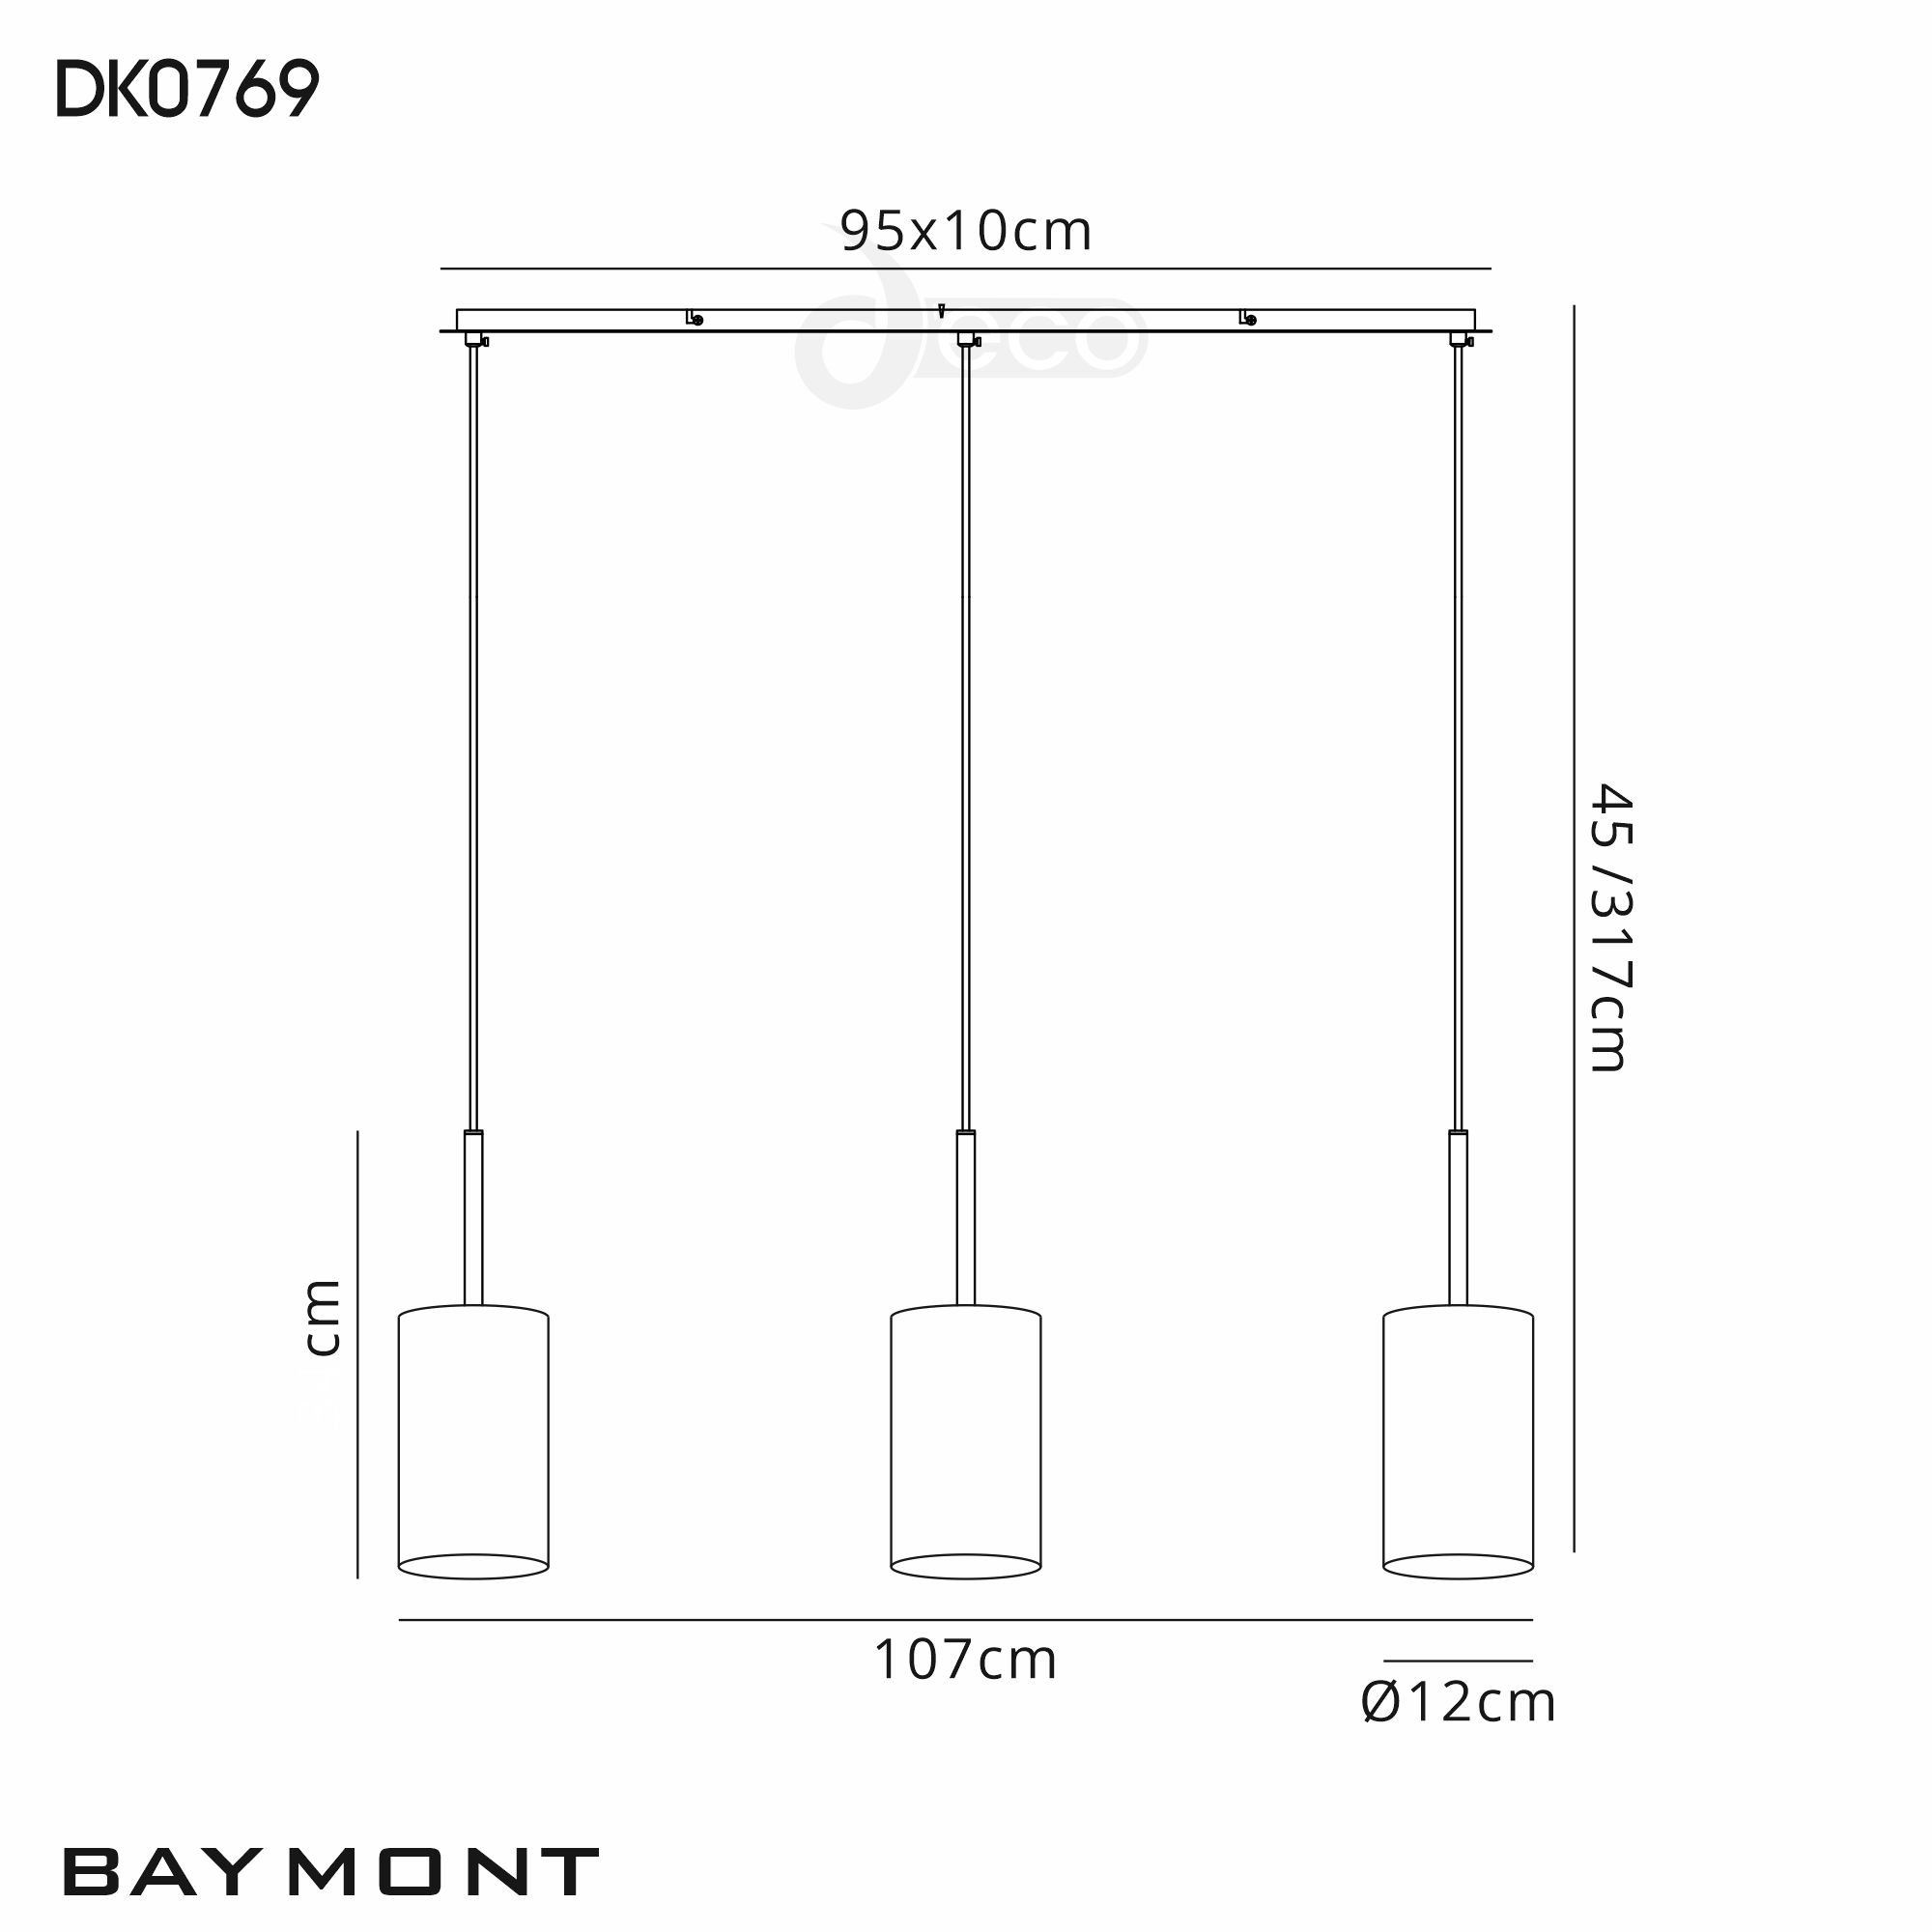 DK0769  Baymont 12cm Shade 3 Light Pendant Polished Chrome, White